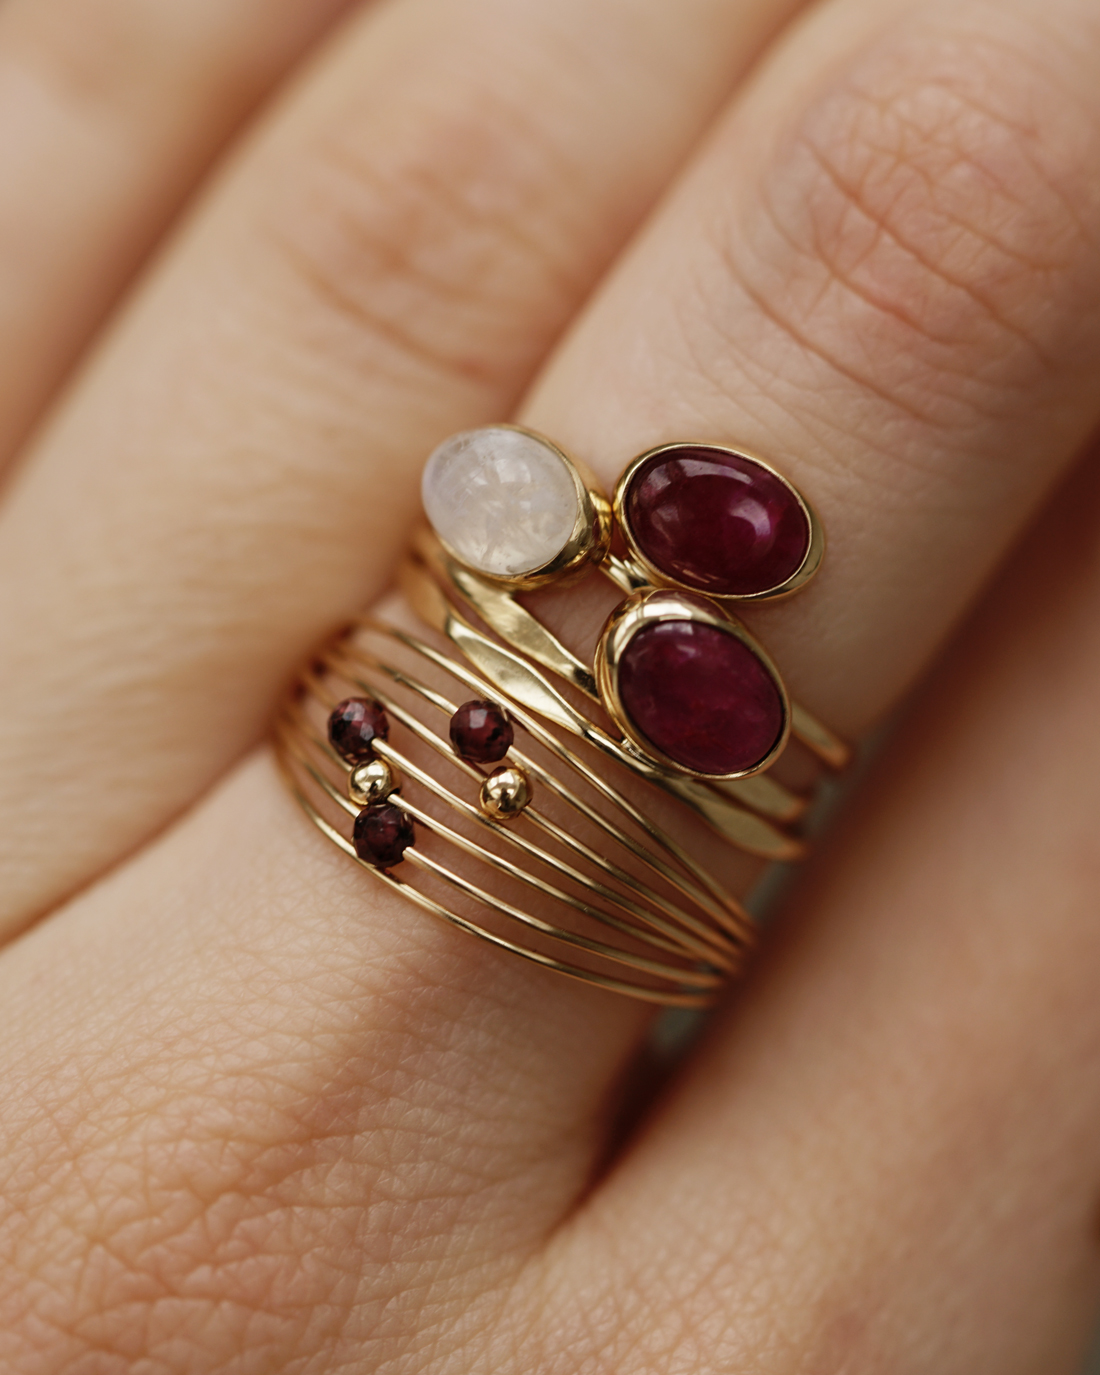 magenta ruby gemstone rings on a hand